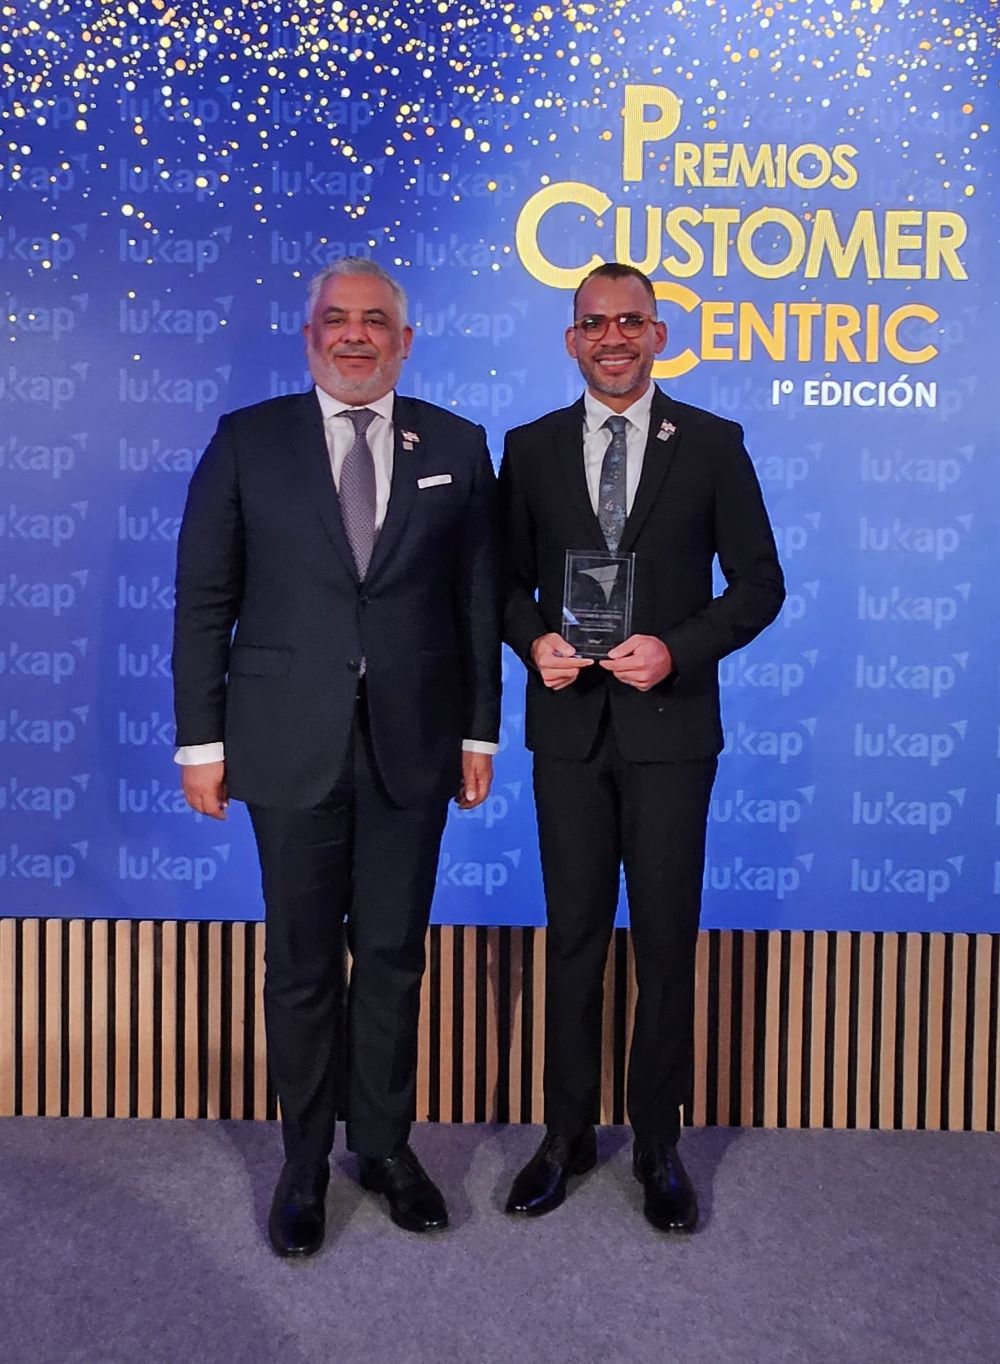 Seguros Reservas primera aseguradora en América Latina galardonada en los premios Customer Centric de Lukkap